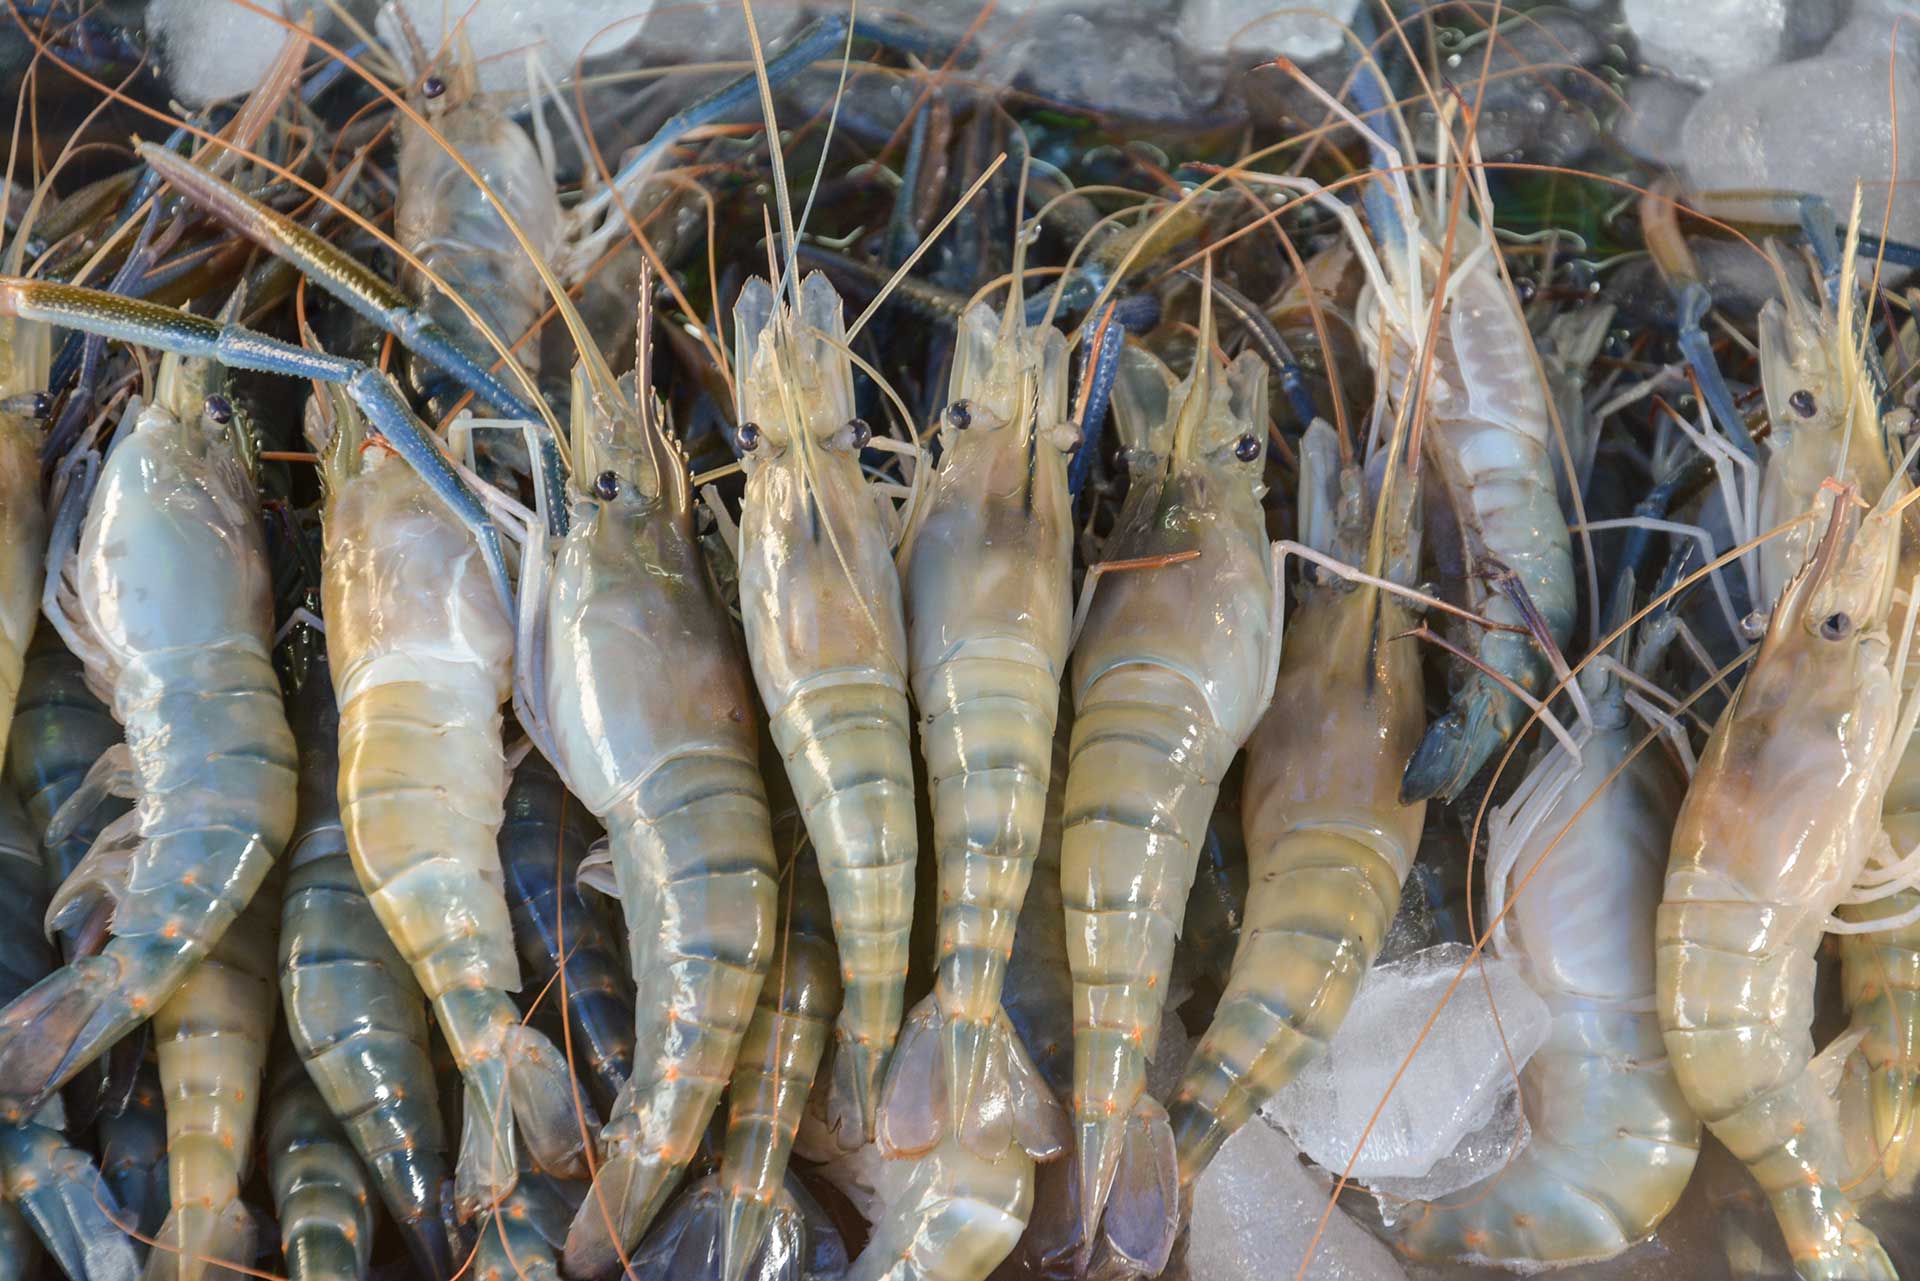 Detecting Bad Shrimp: How to Tell If Shrimp Has Gone Bad